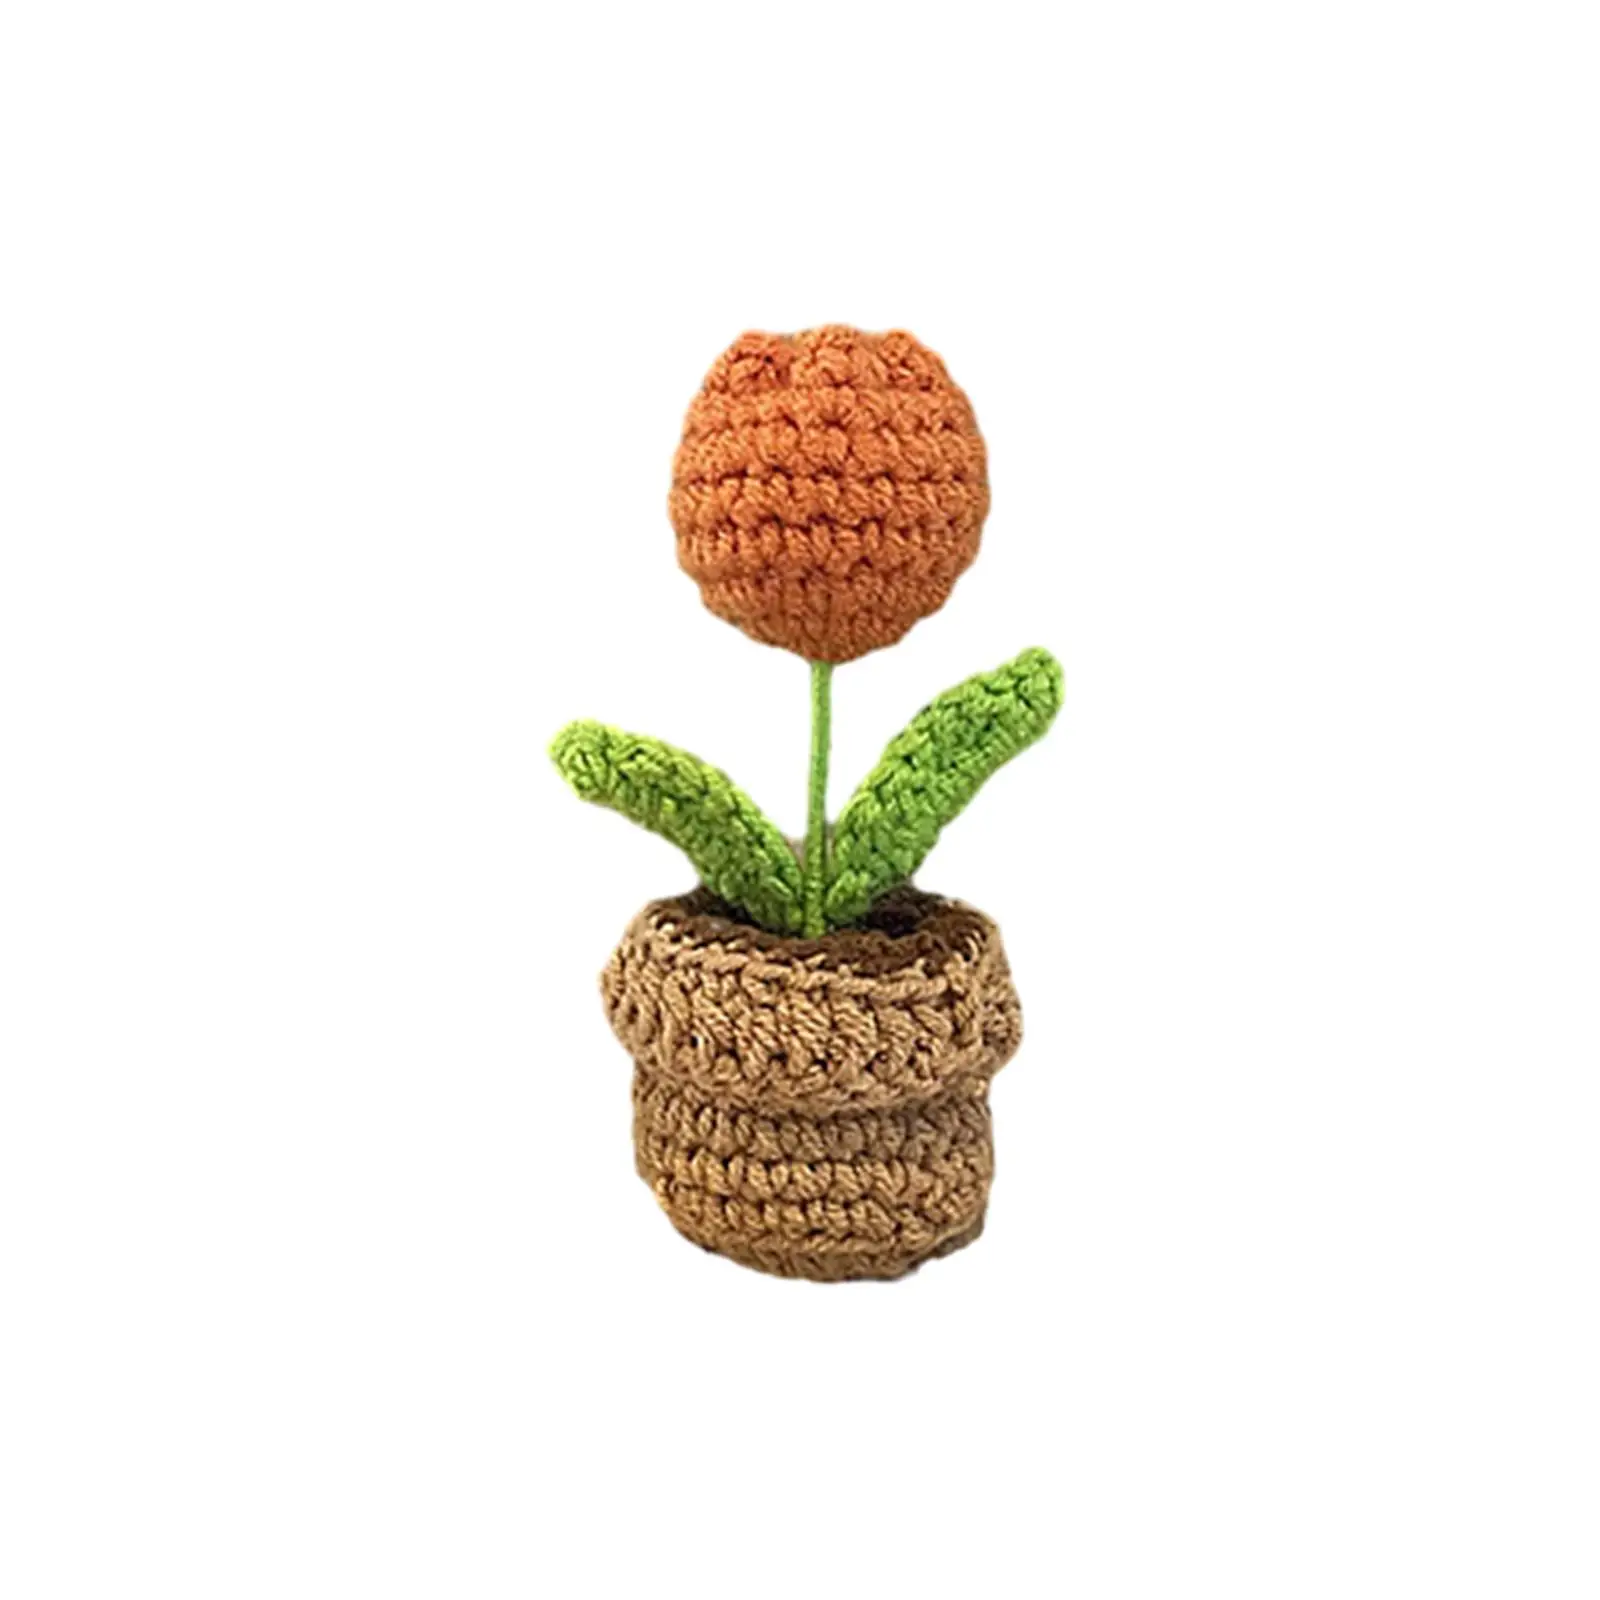 Handmade Crochet Flowers Home Table Decor Mini Crochet Potted Plant Ornaments